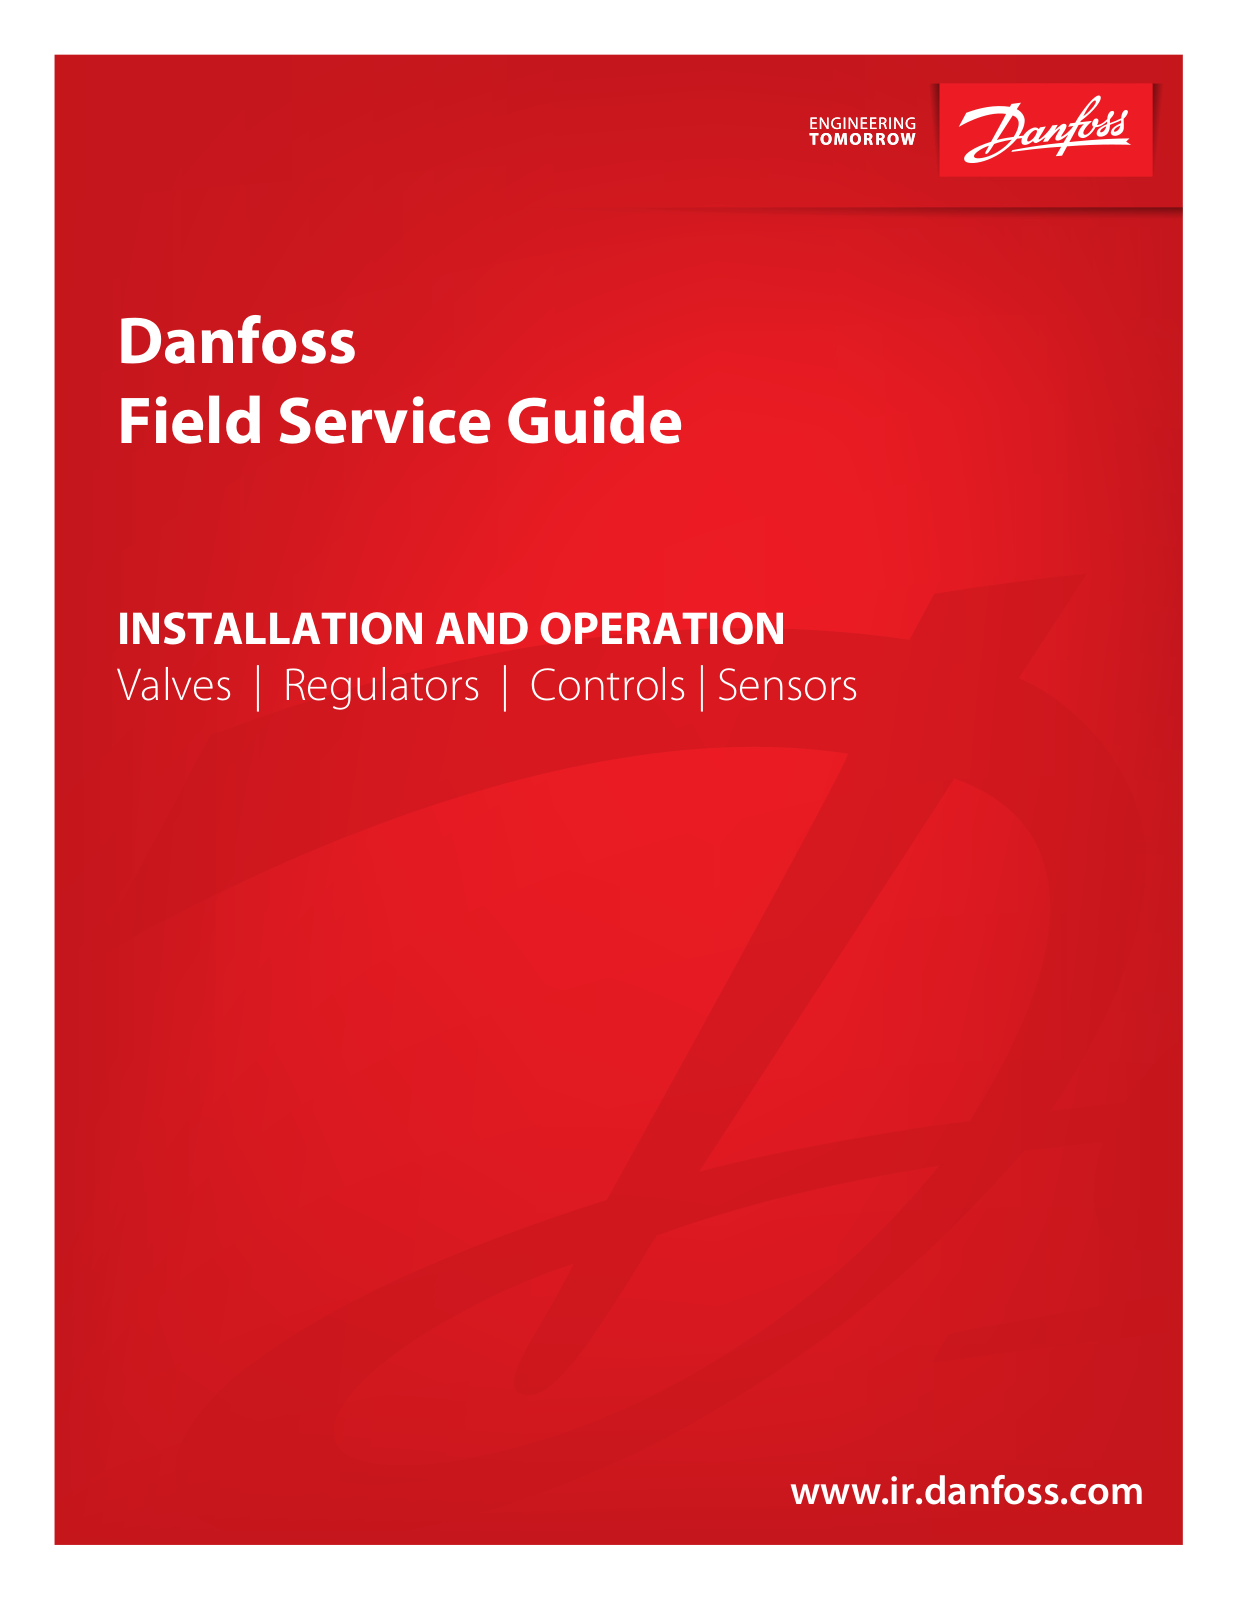 Danfoss Valves, Regulators, Controls, Sensors Service guide